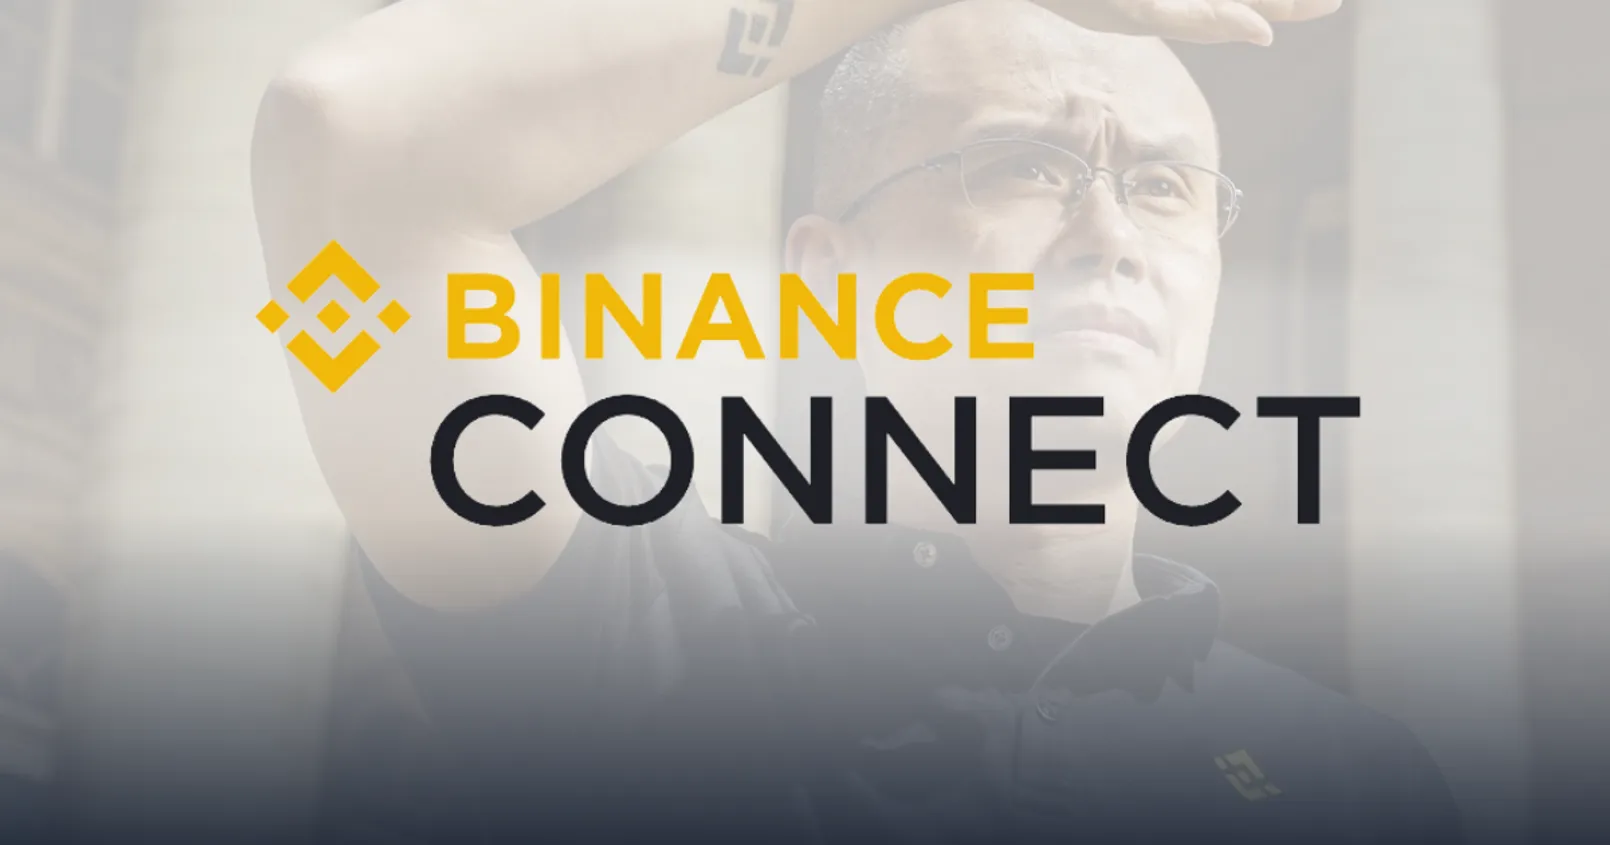 ‘Binance Connect’ ปิดตัวอย่างเป็นทางการ 16 สิงหาฯ มองไม่ตอบโจทย์ตลาด